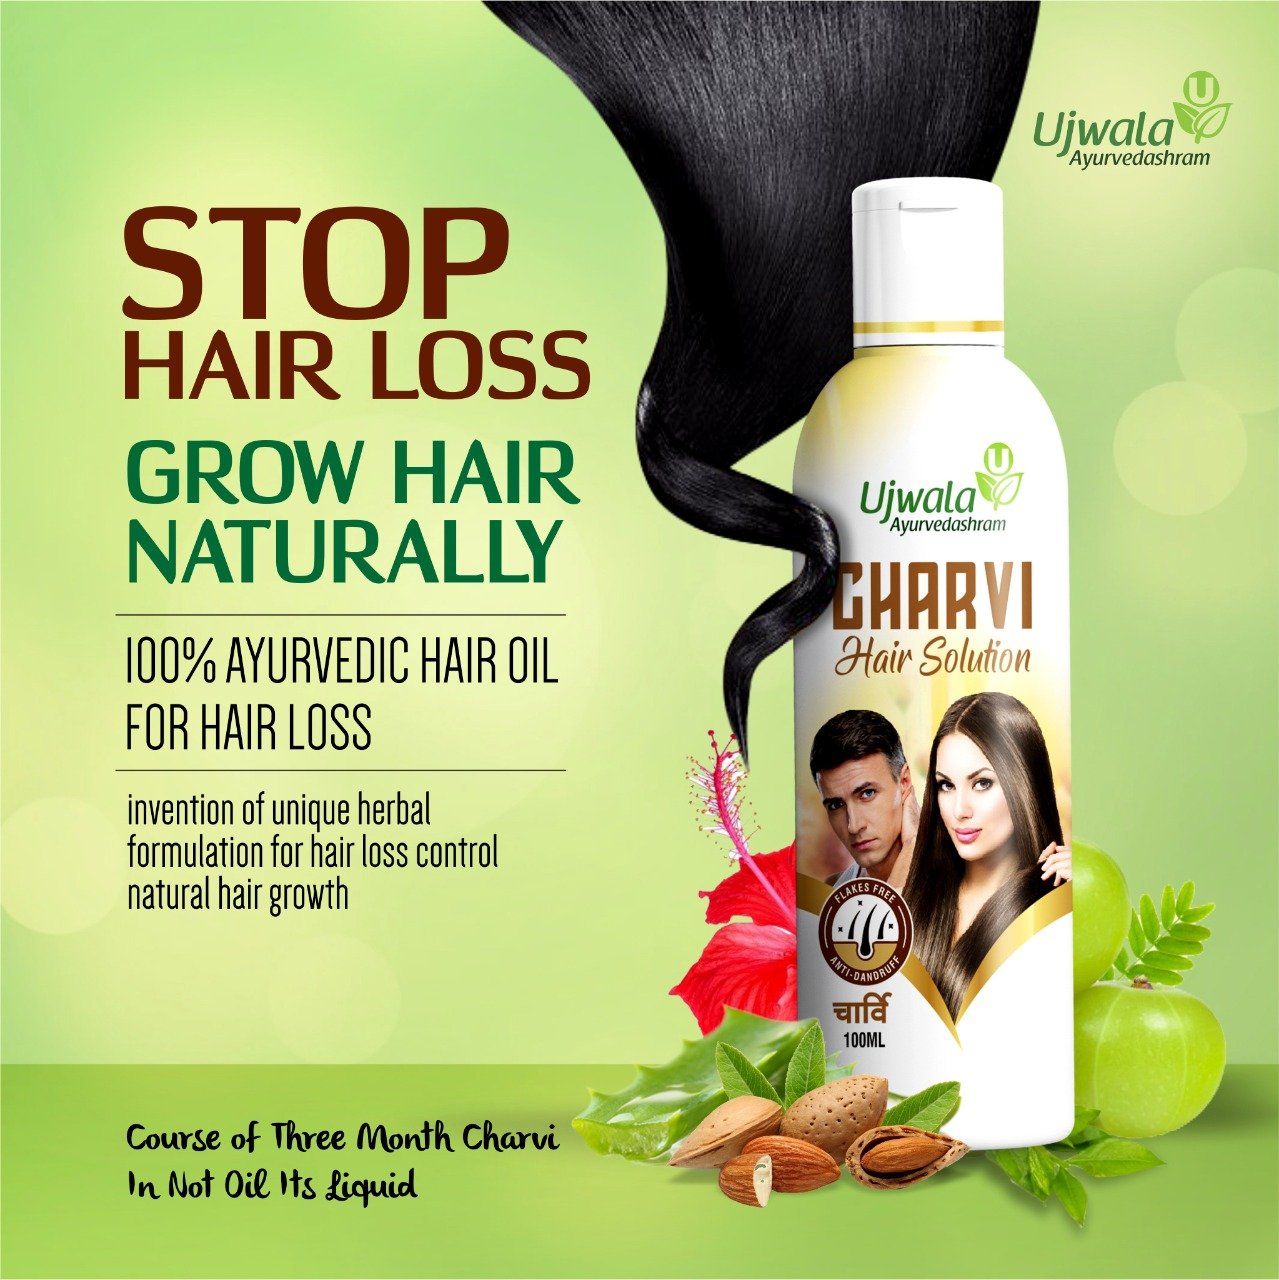 Charvi hair Solution and Charvi capsule - Ujwala Ayurvedashram